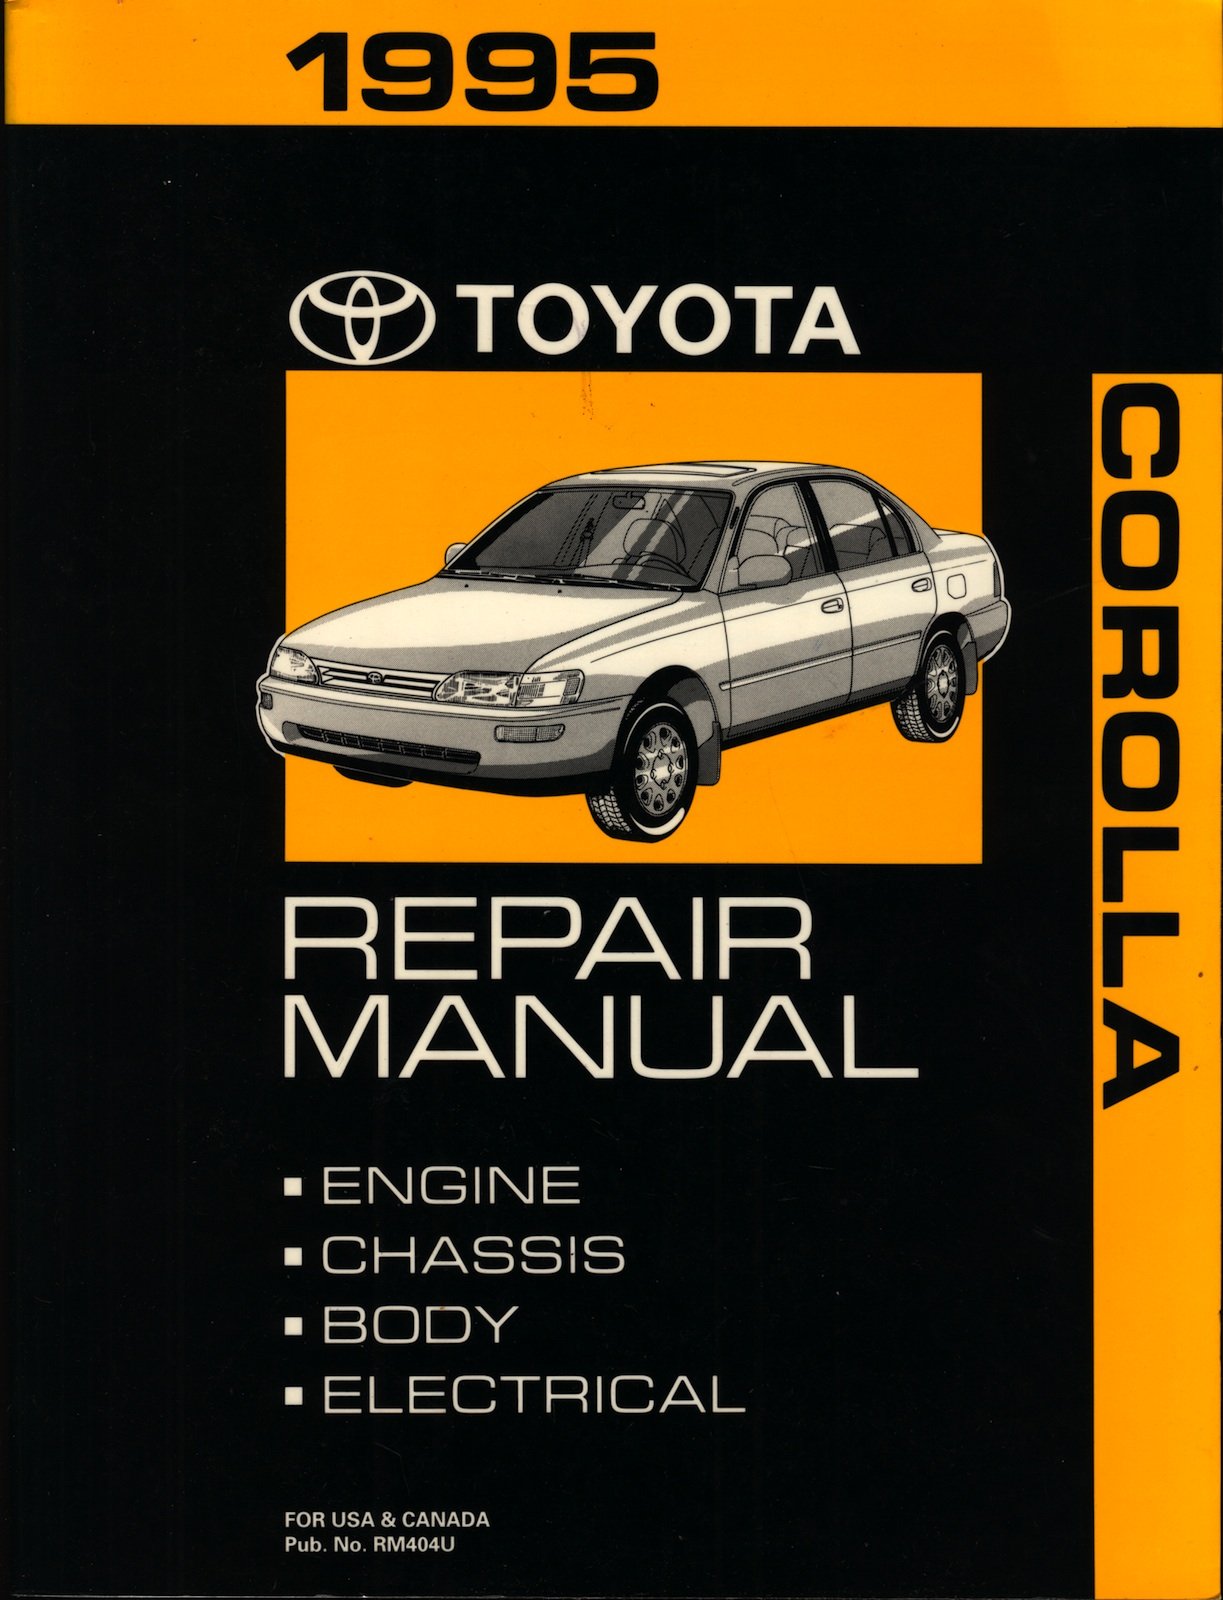 1995 toyota supra turbo for sale